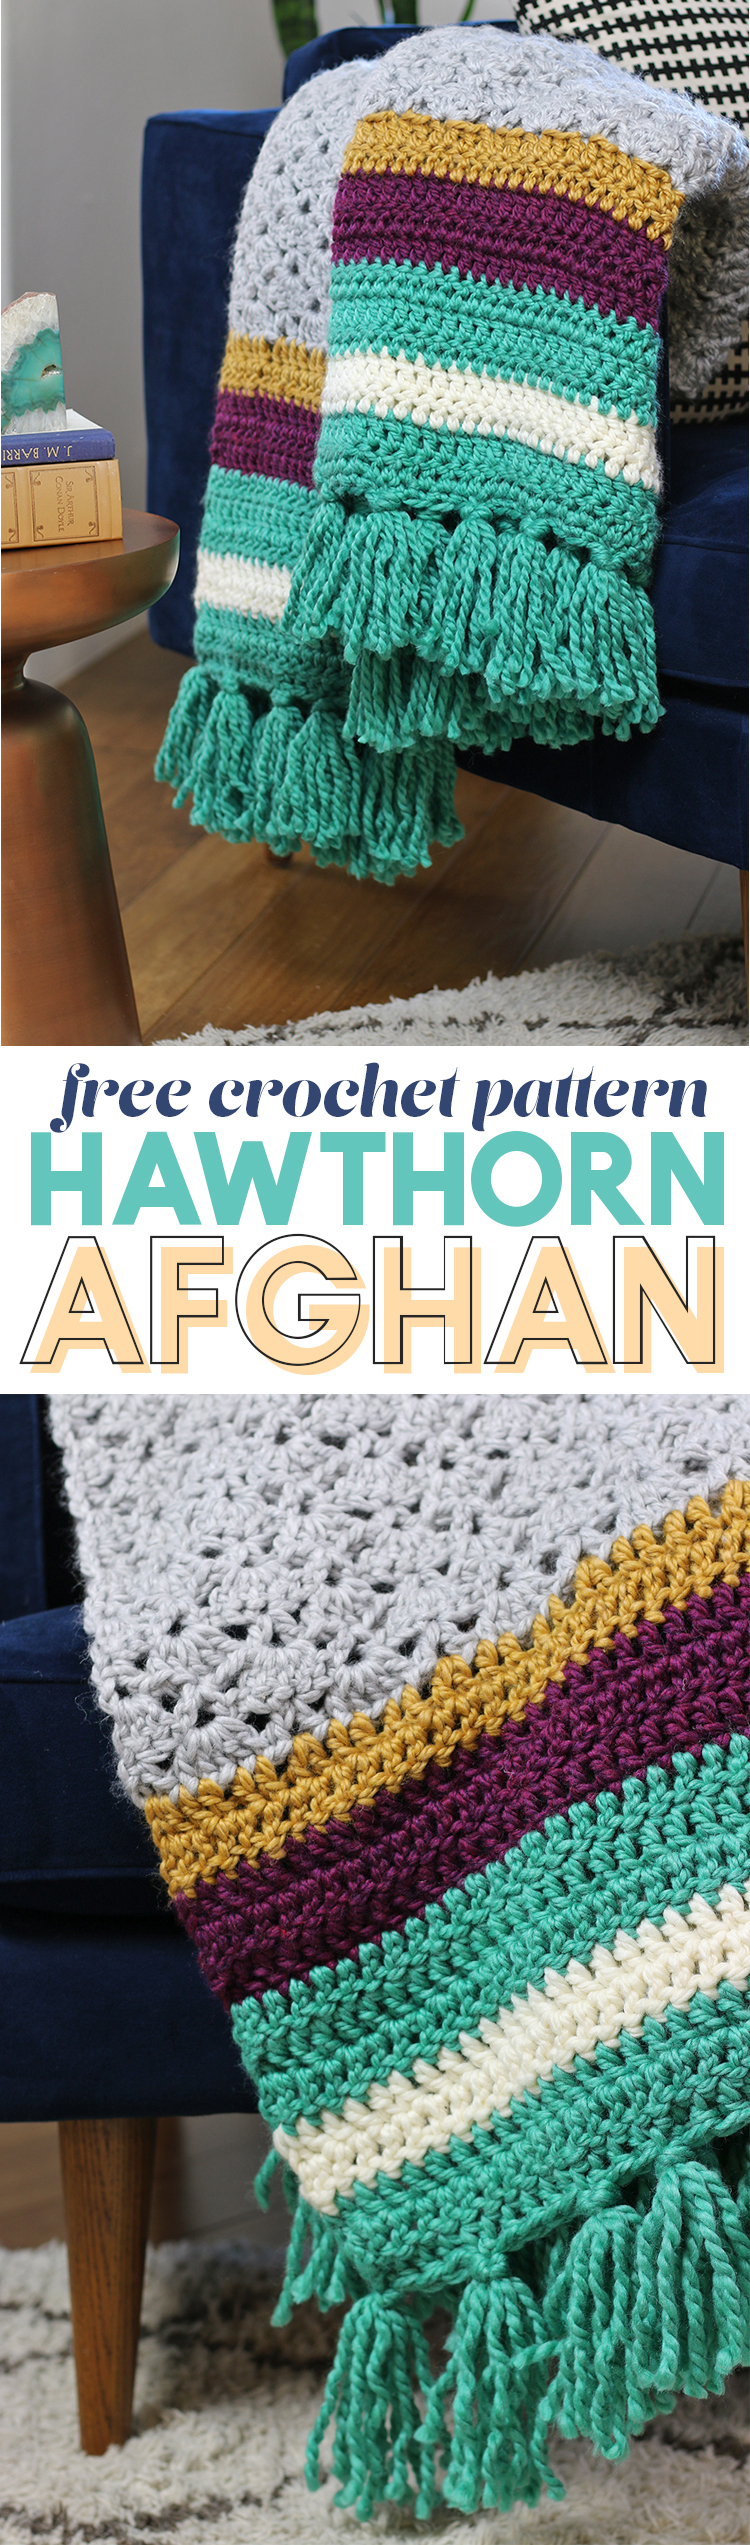 Free Crochet Afghan Pattern The Hawthorn Afghan Free Crochet Afghan Pattern Persia Lou